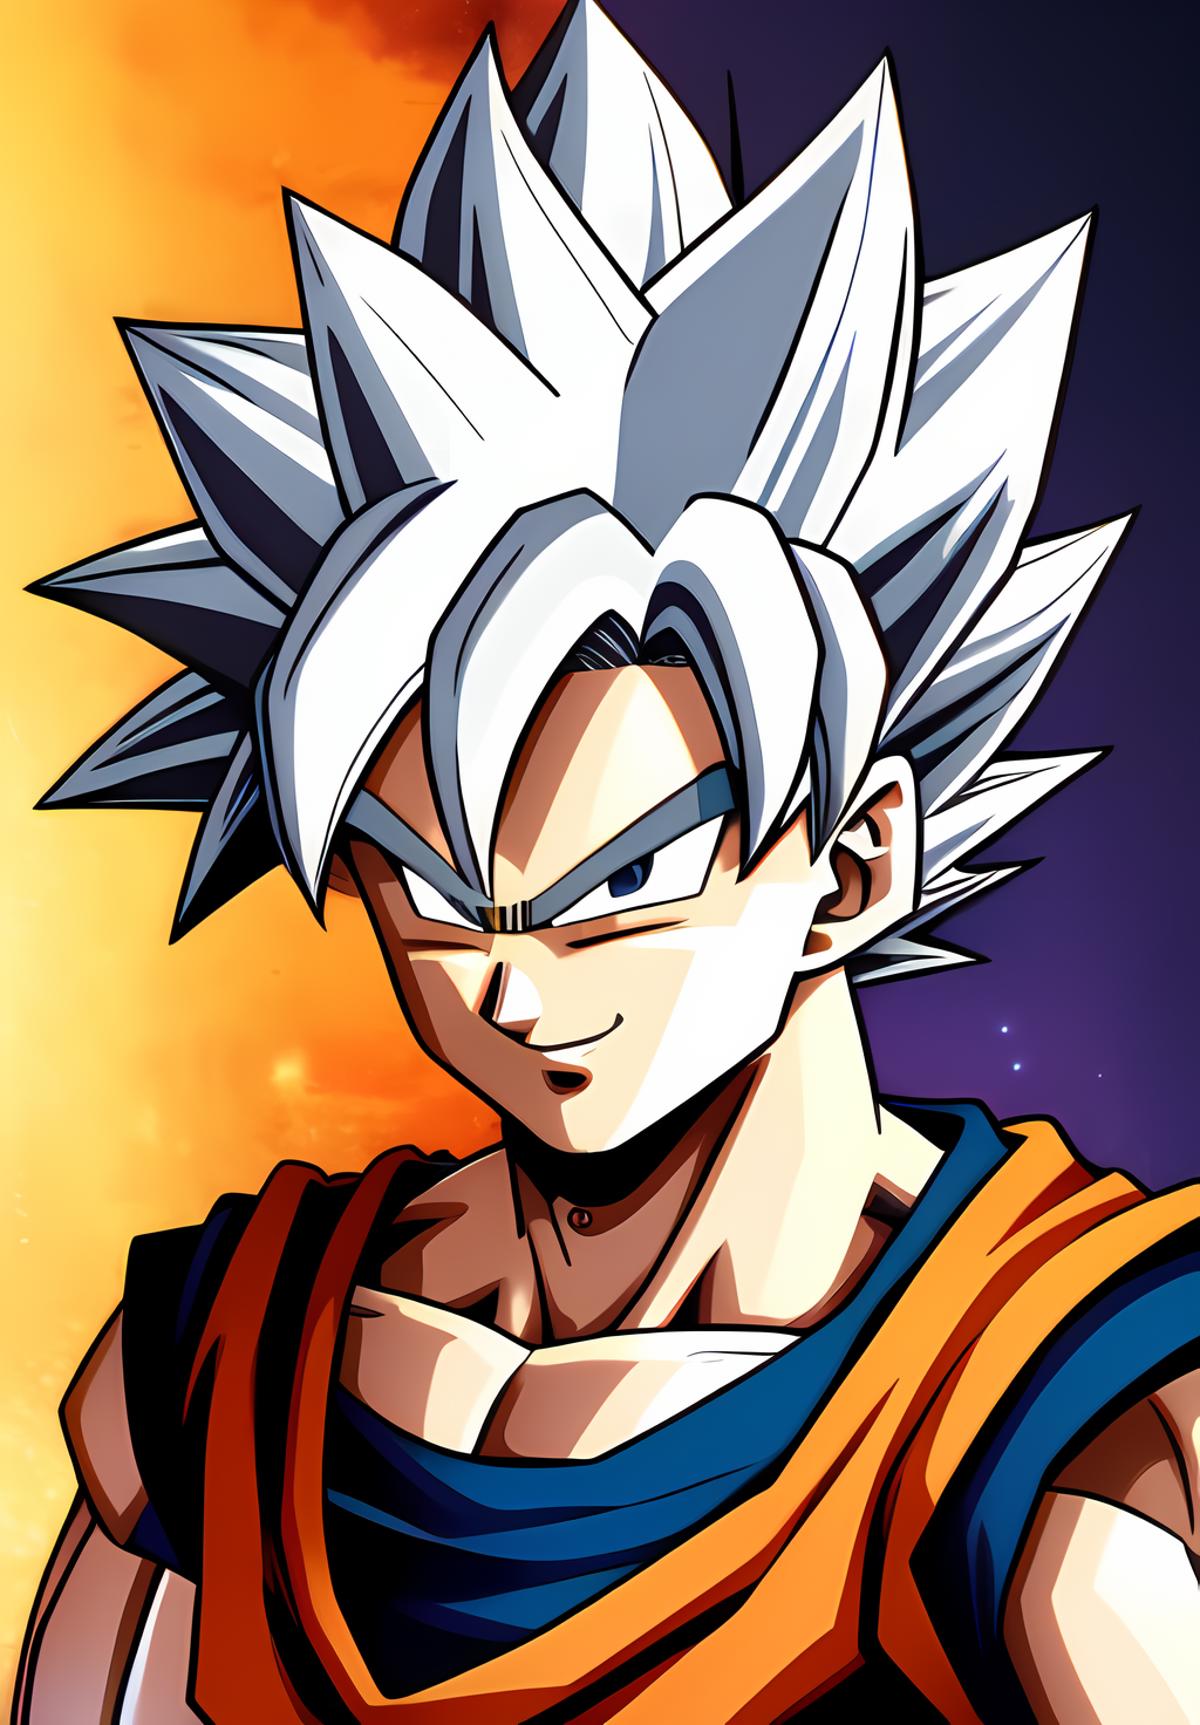 Son Goku - Dragon Ball image by AsaTyr